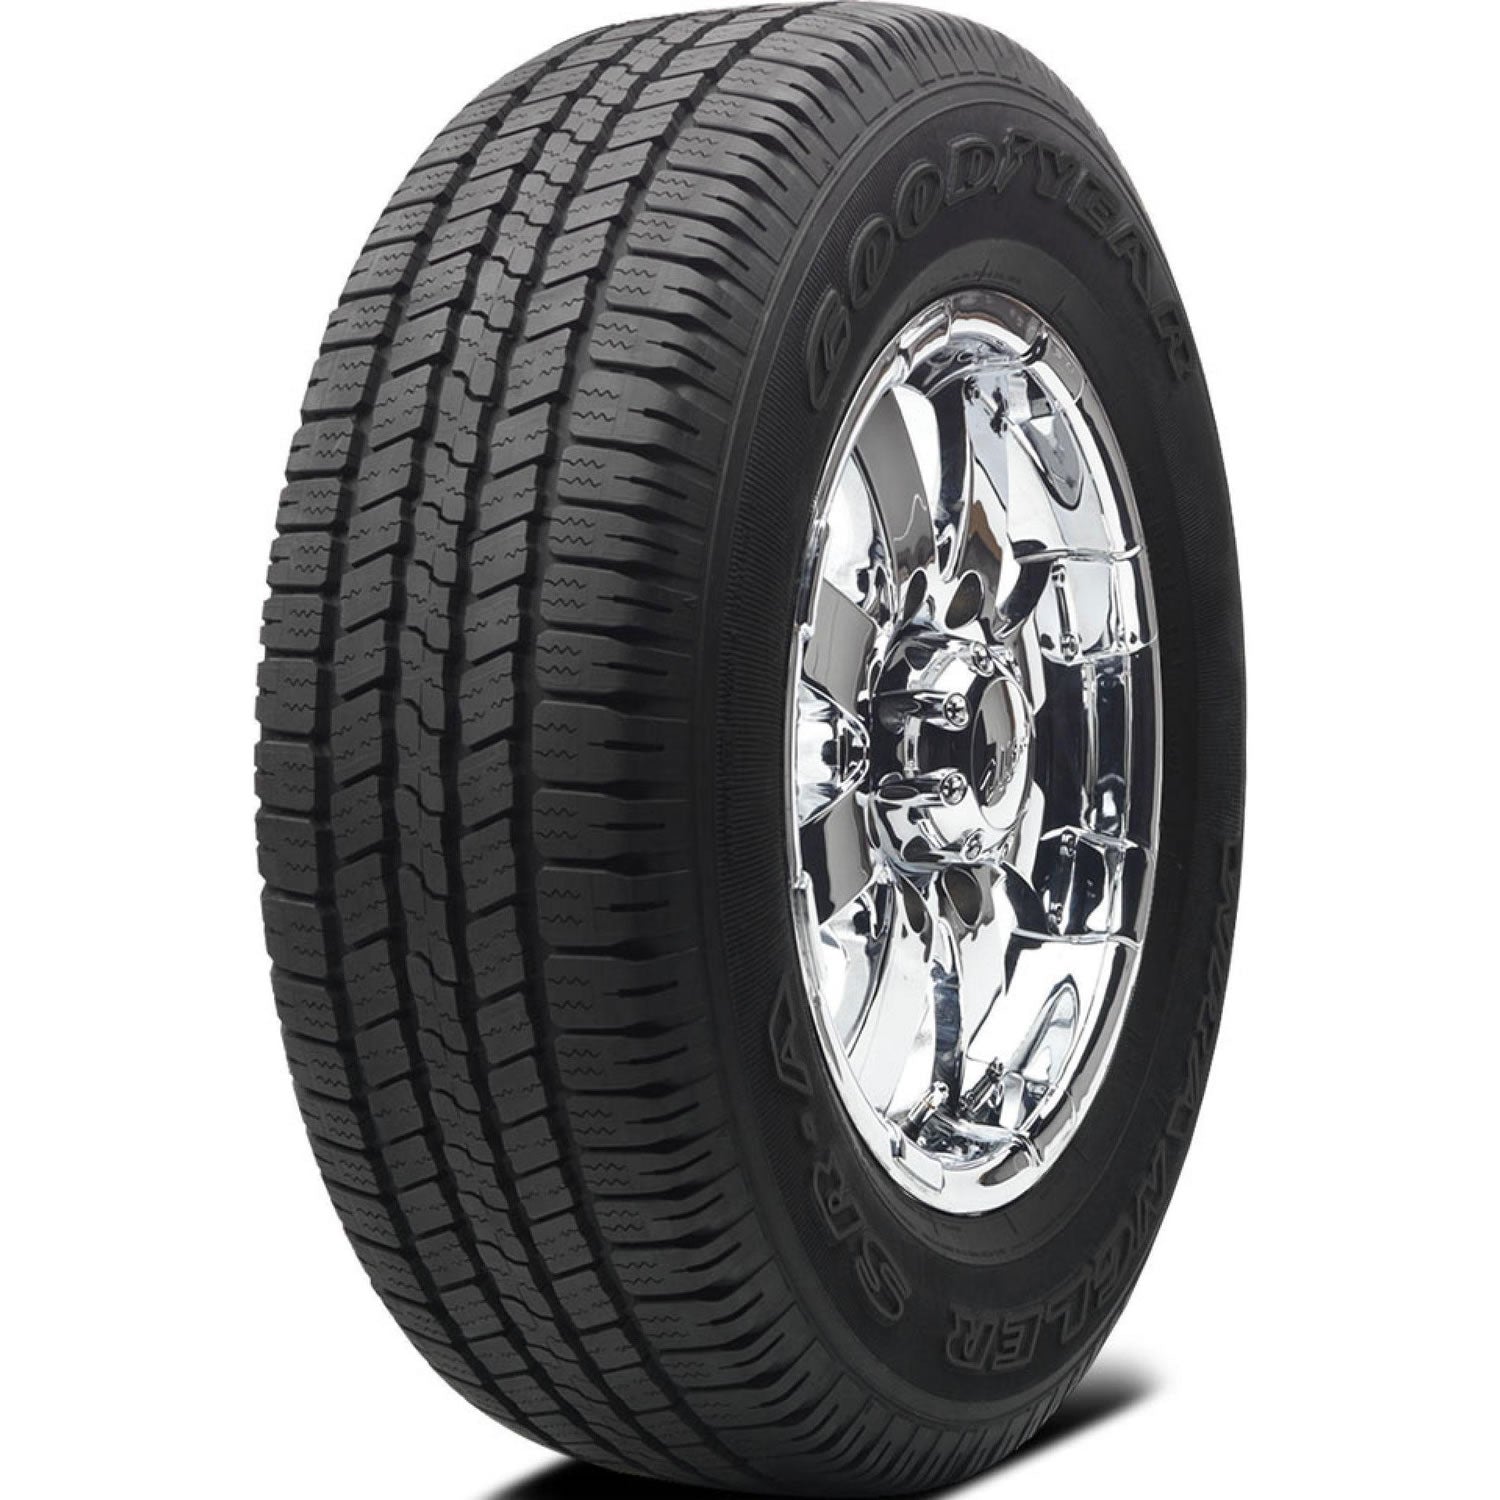 GOODYEAR WRANGLER SR-A 215/70R16 (27.9X8.7R 16) Tires